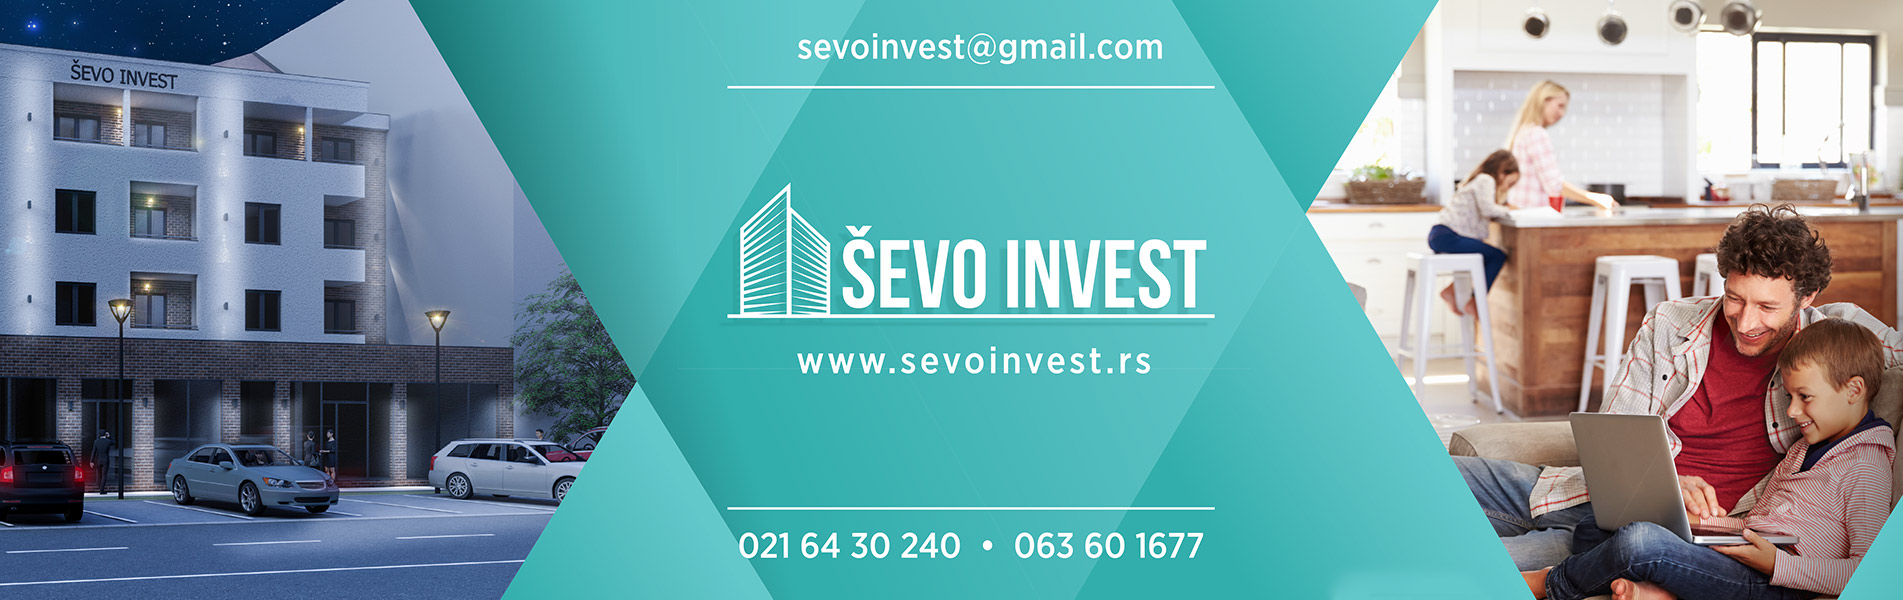 Ševo invest - prodaja stanova i lokala